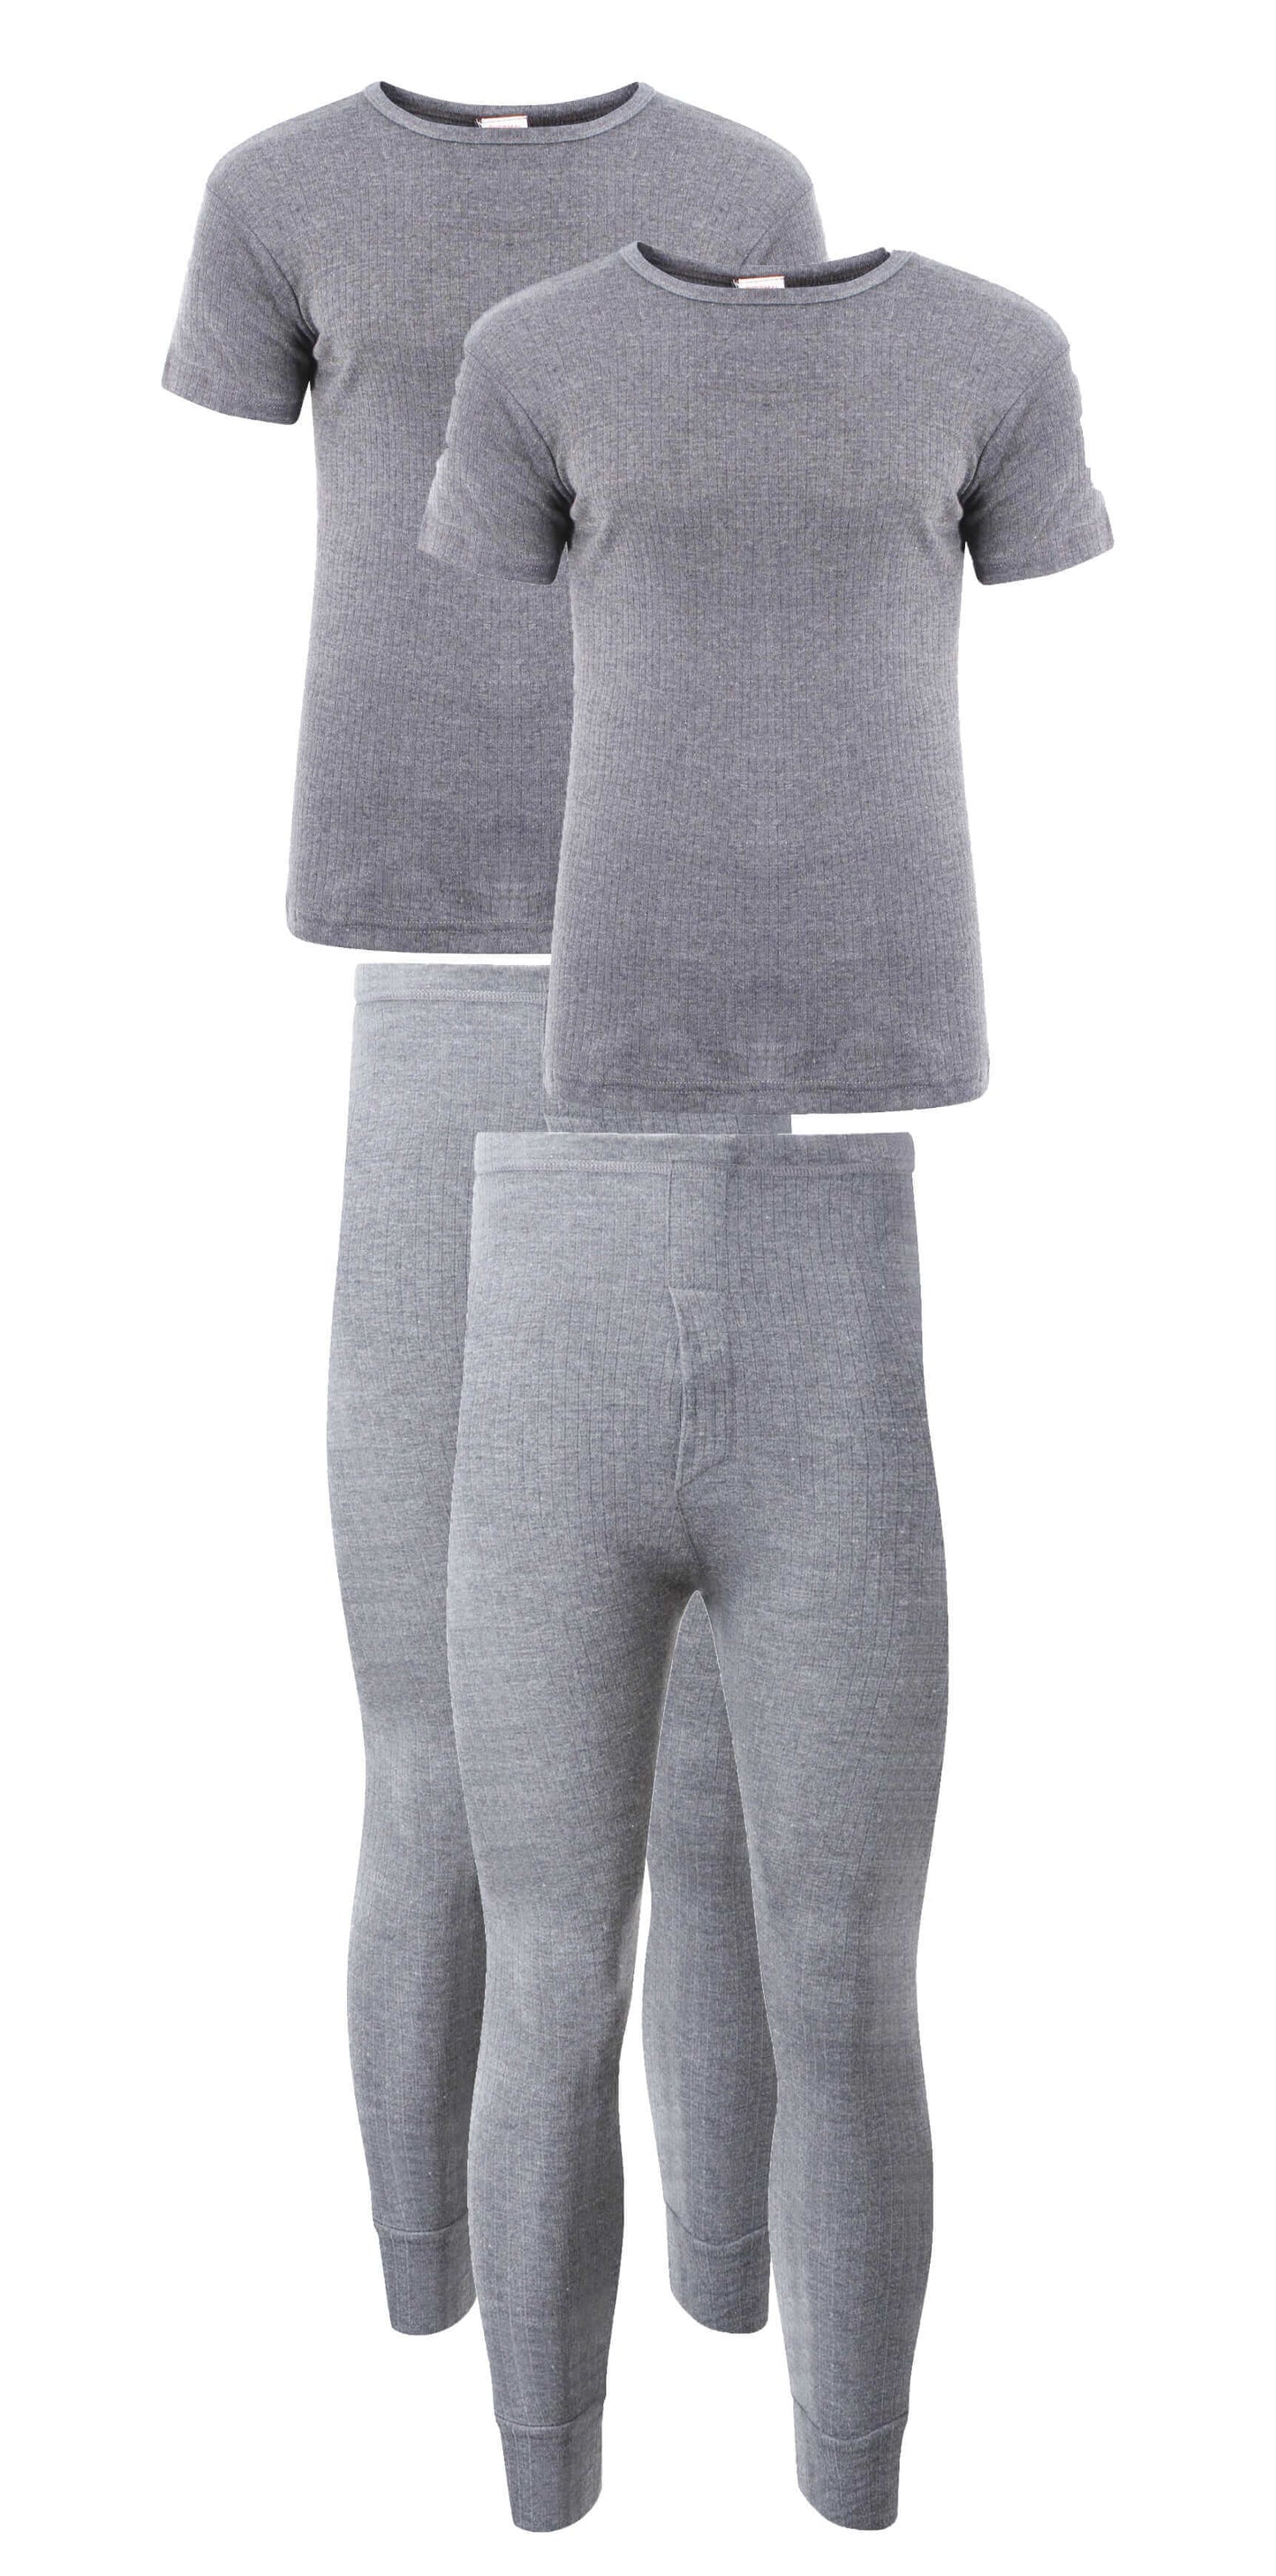 Heatwave® Pack Of 2 Men's Thermal Underwear Set, T-Shirt & Pants Baselayer Set. Buy now for £18.00. A Thermal Underwear by Heatwave Thermalwear. baselayer, black, blue, charcoal, grey, heatwave, hiking, large, long johns, long sleeve, marl grey, medium, m